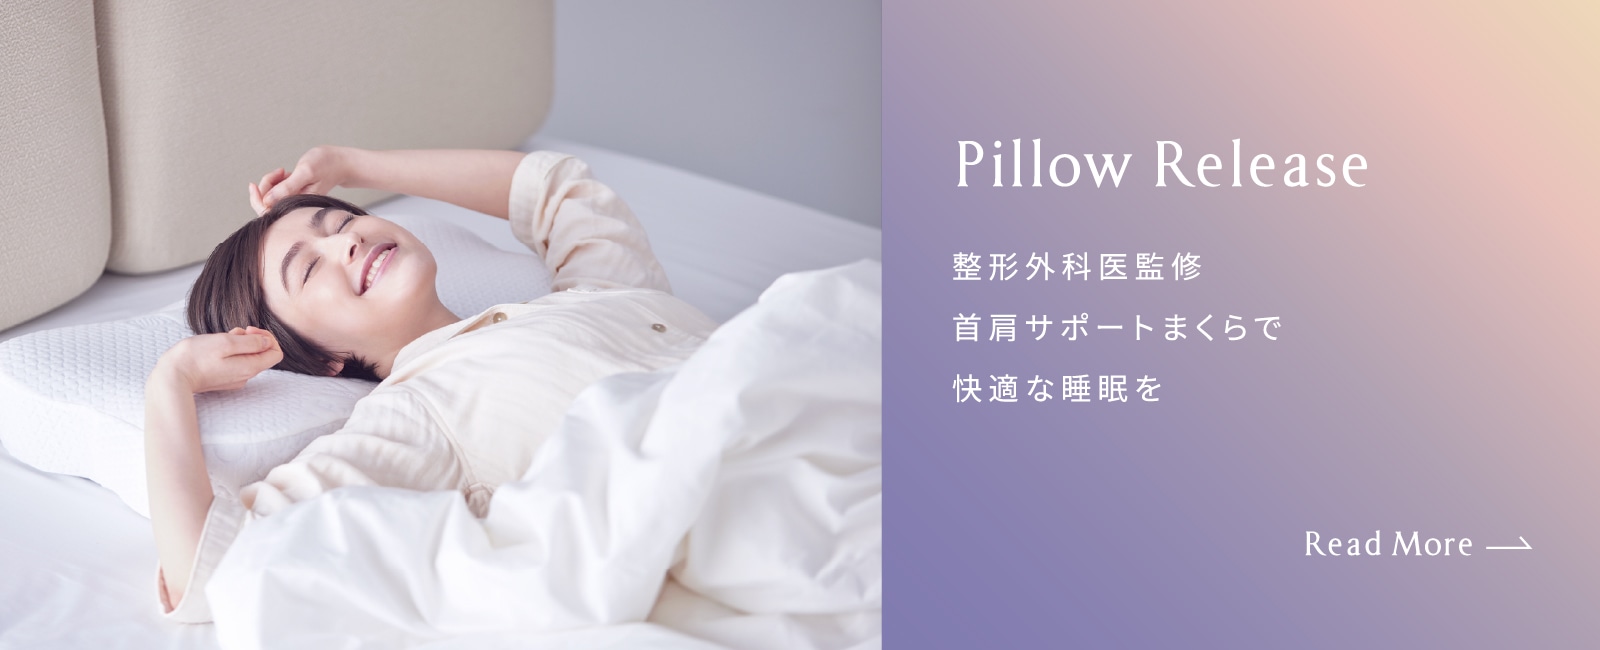 Pillow Release 整形外科医監修 首肩サポートまくらで快適な睡眠を